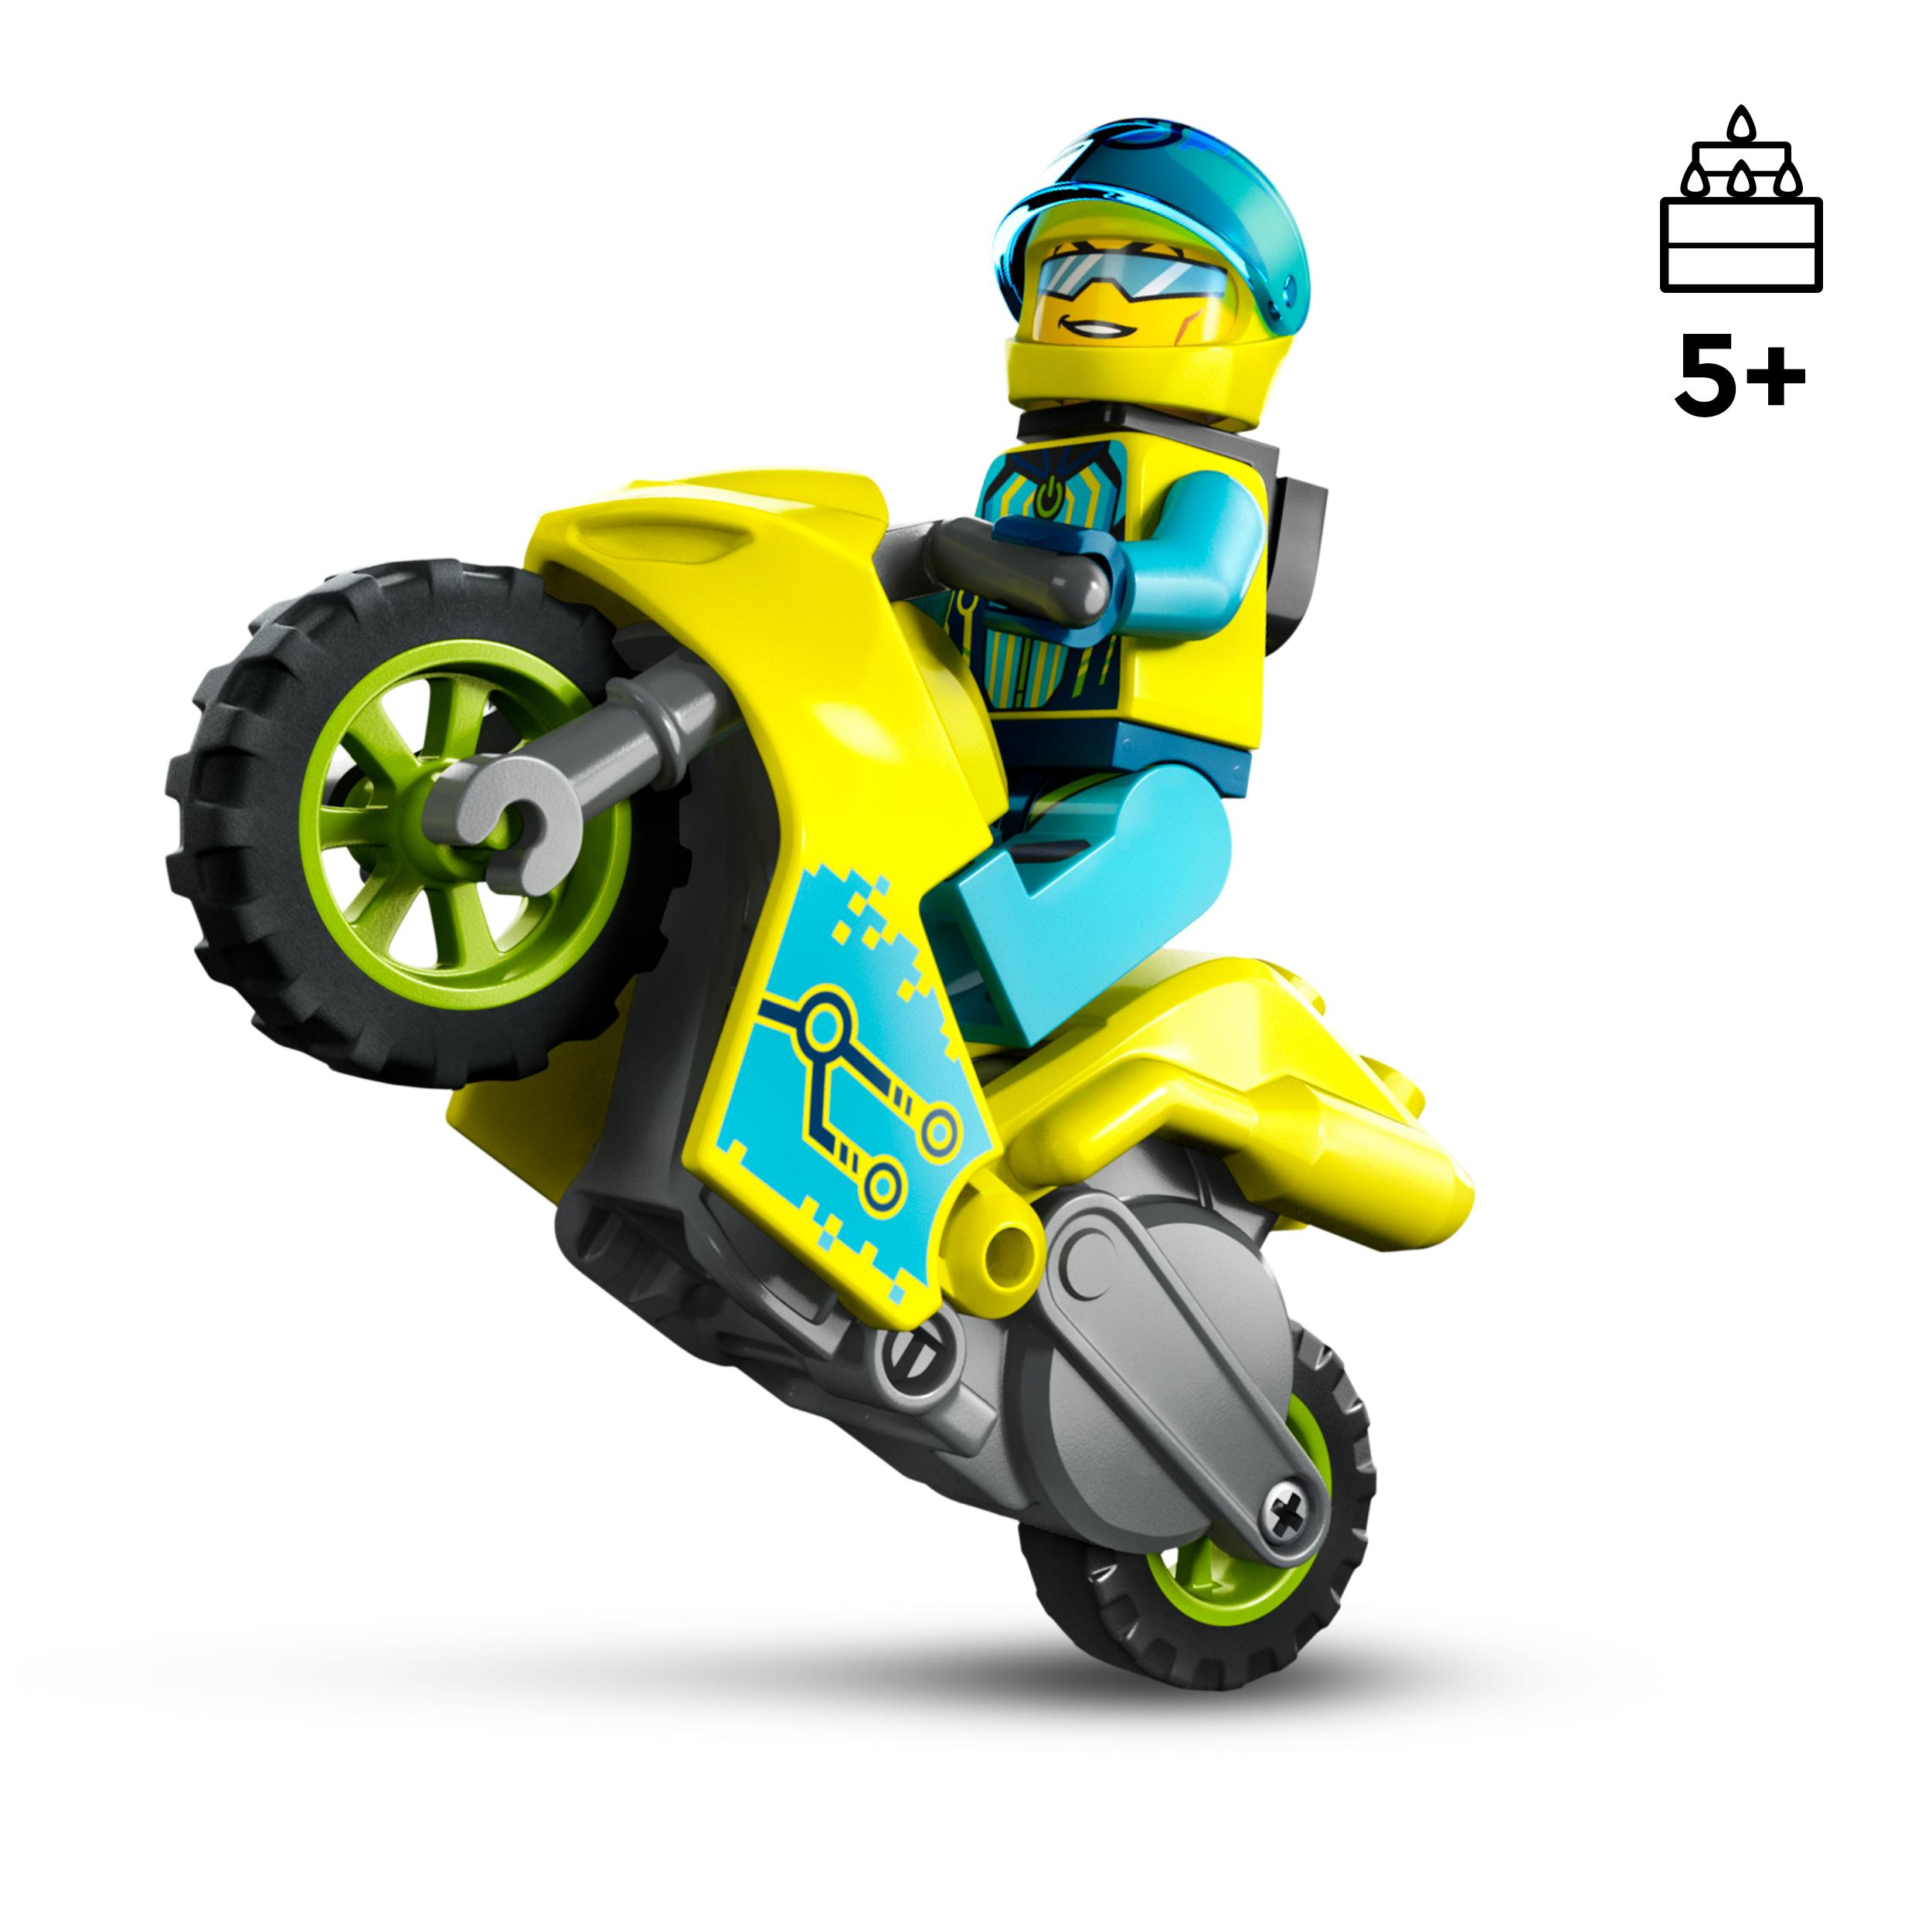 Cyber-Stuntbike City LEGO 60358 Mehrfarbig Bausatz,